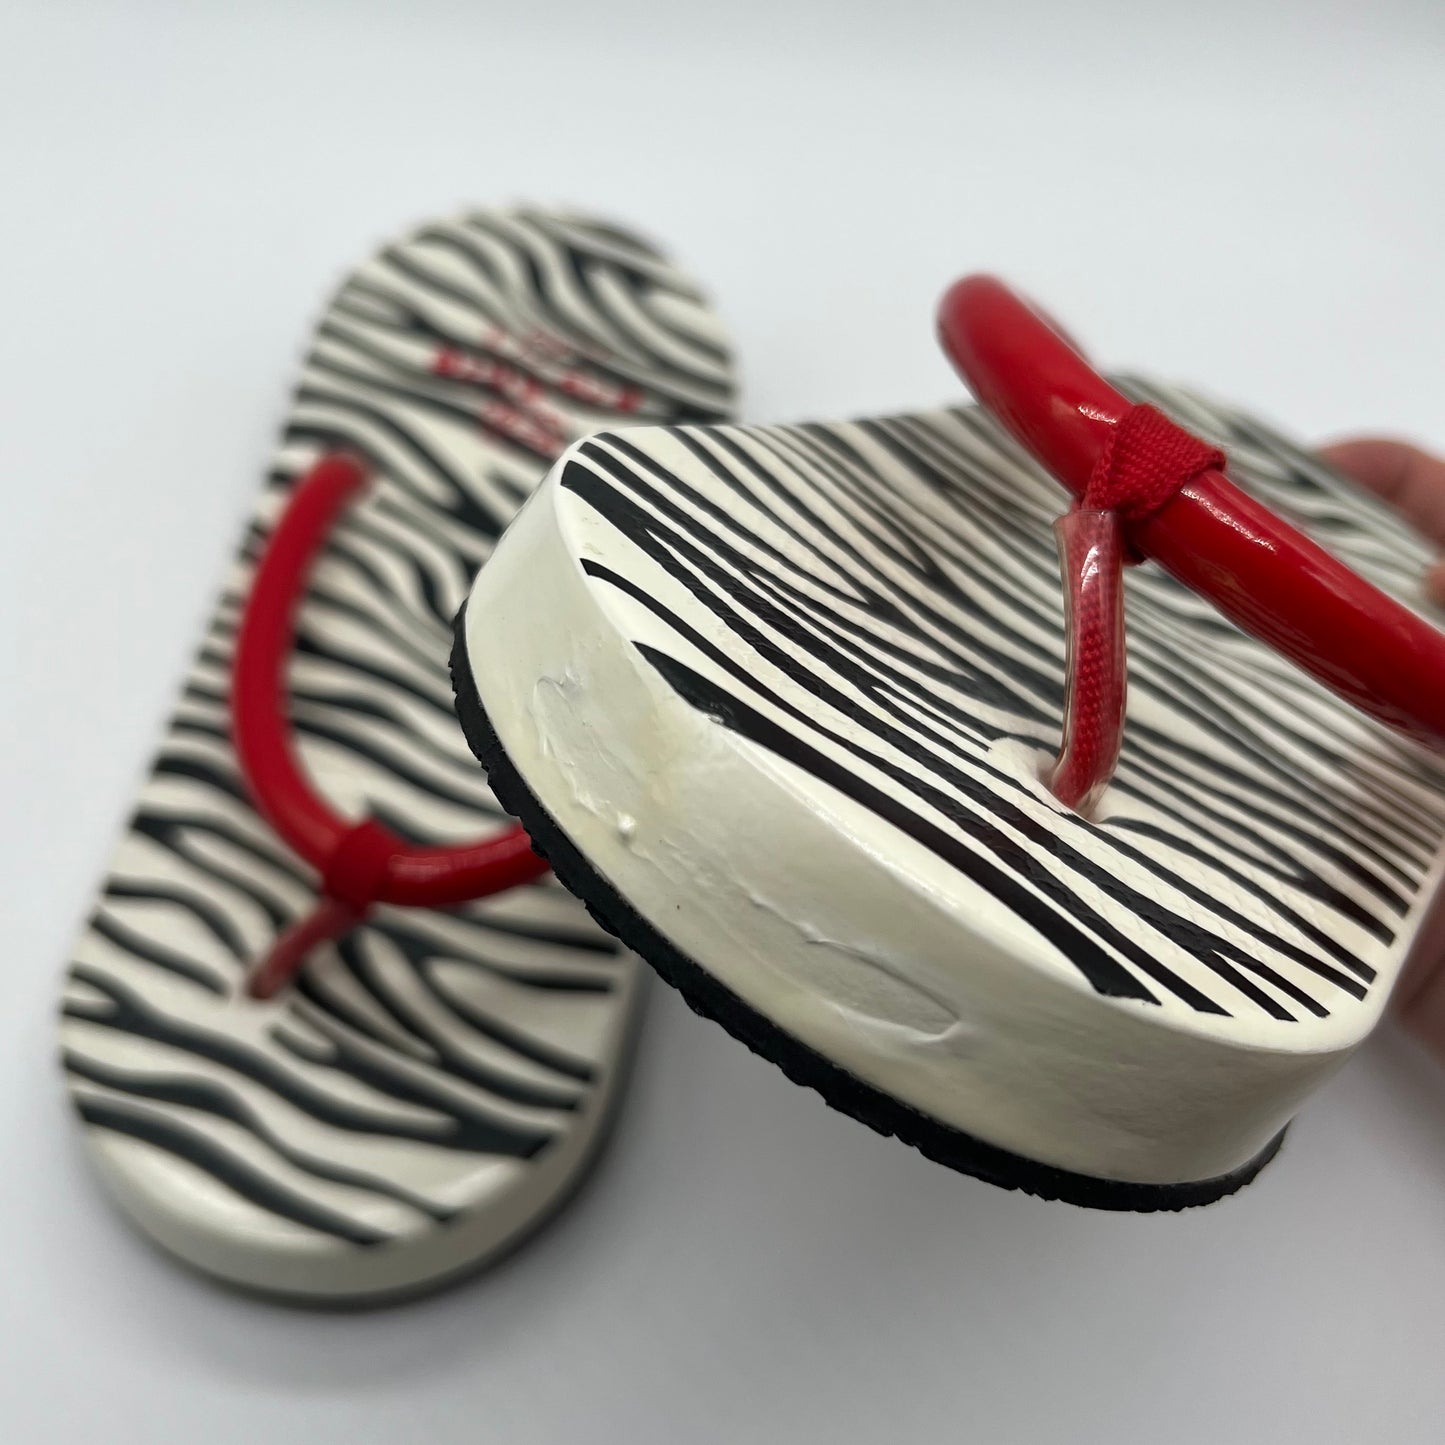 RARE Vintage 90s Sugar Shoes FLOATIES Zebra Stripe Print & Red 10”